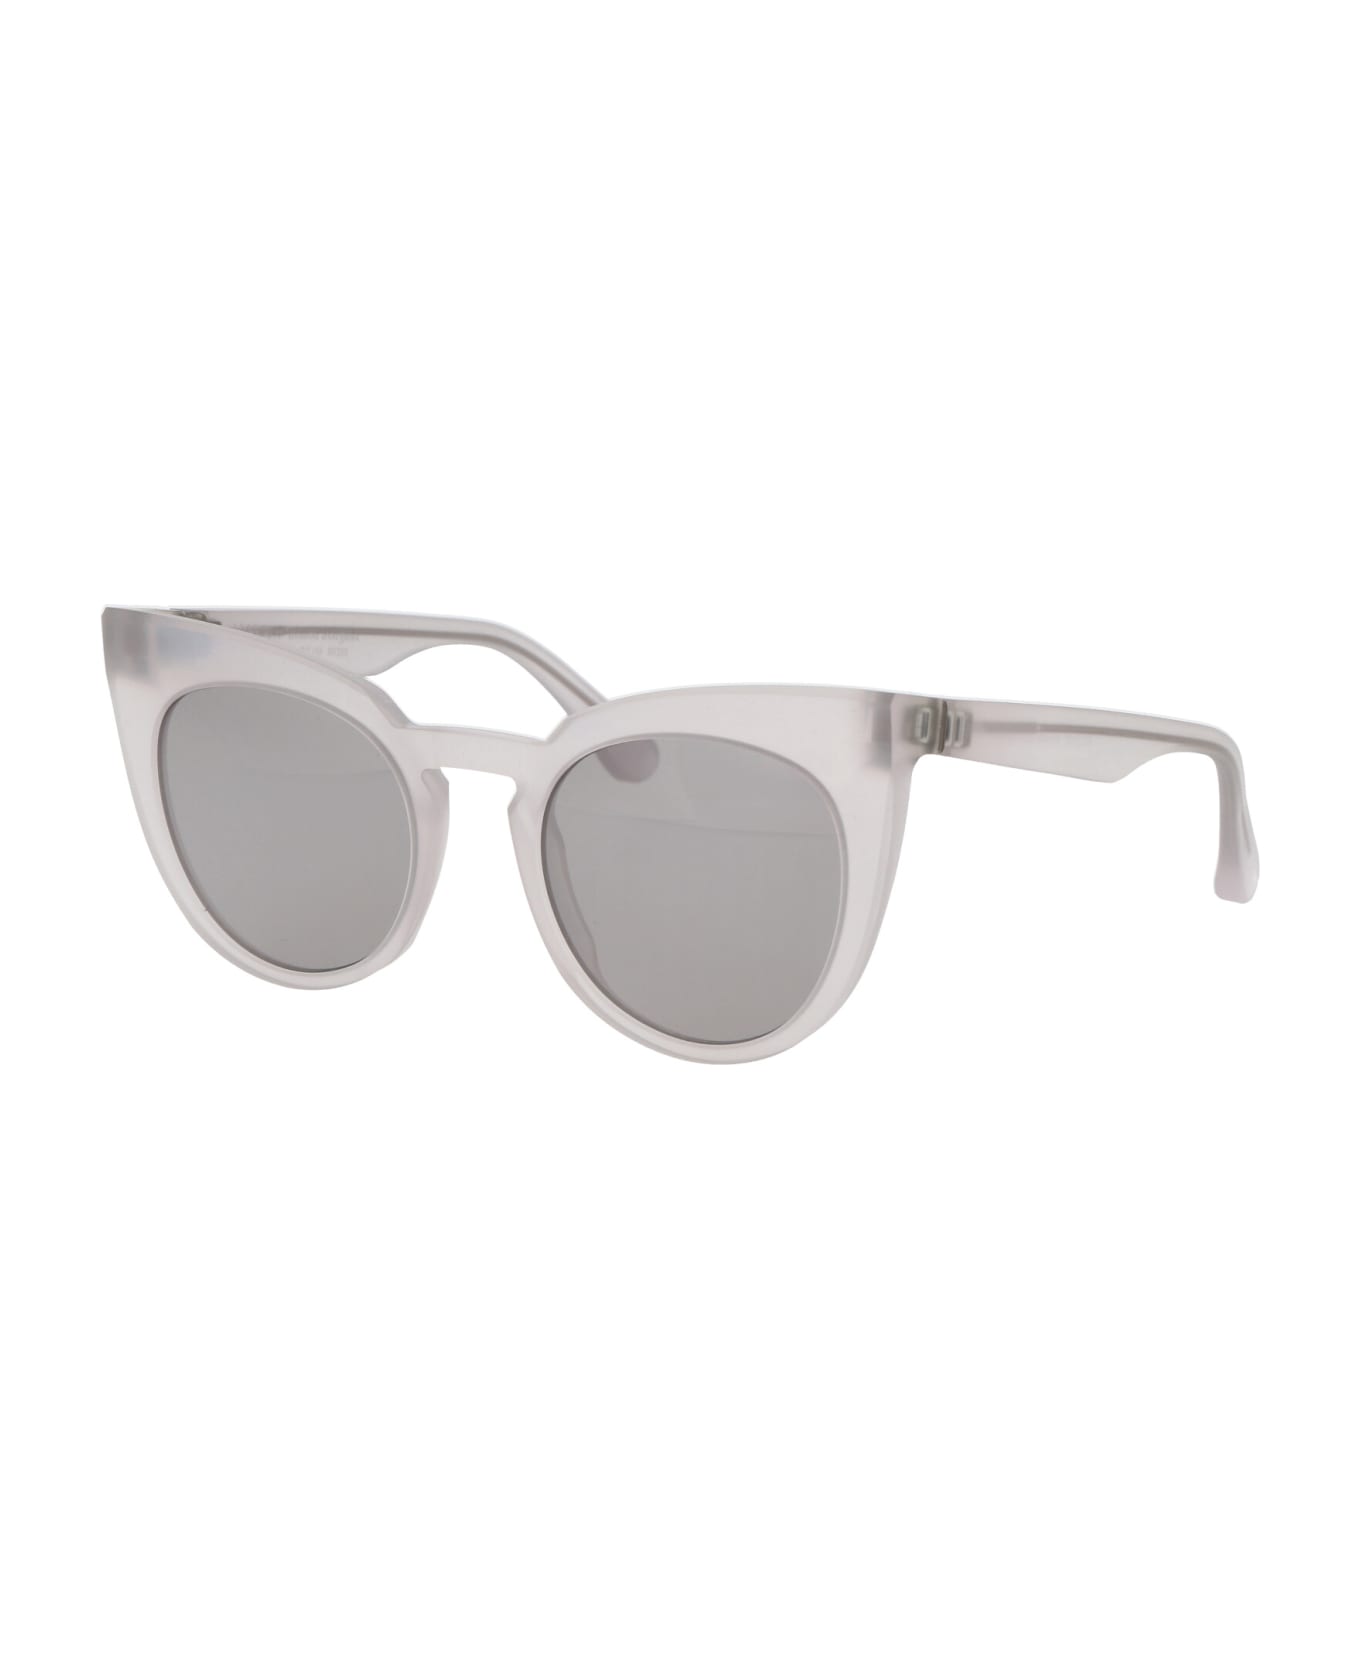 Mykita Mmraw005 Sunglasses - 817 Raw Coconut Water Warm Grey Flash